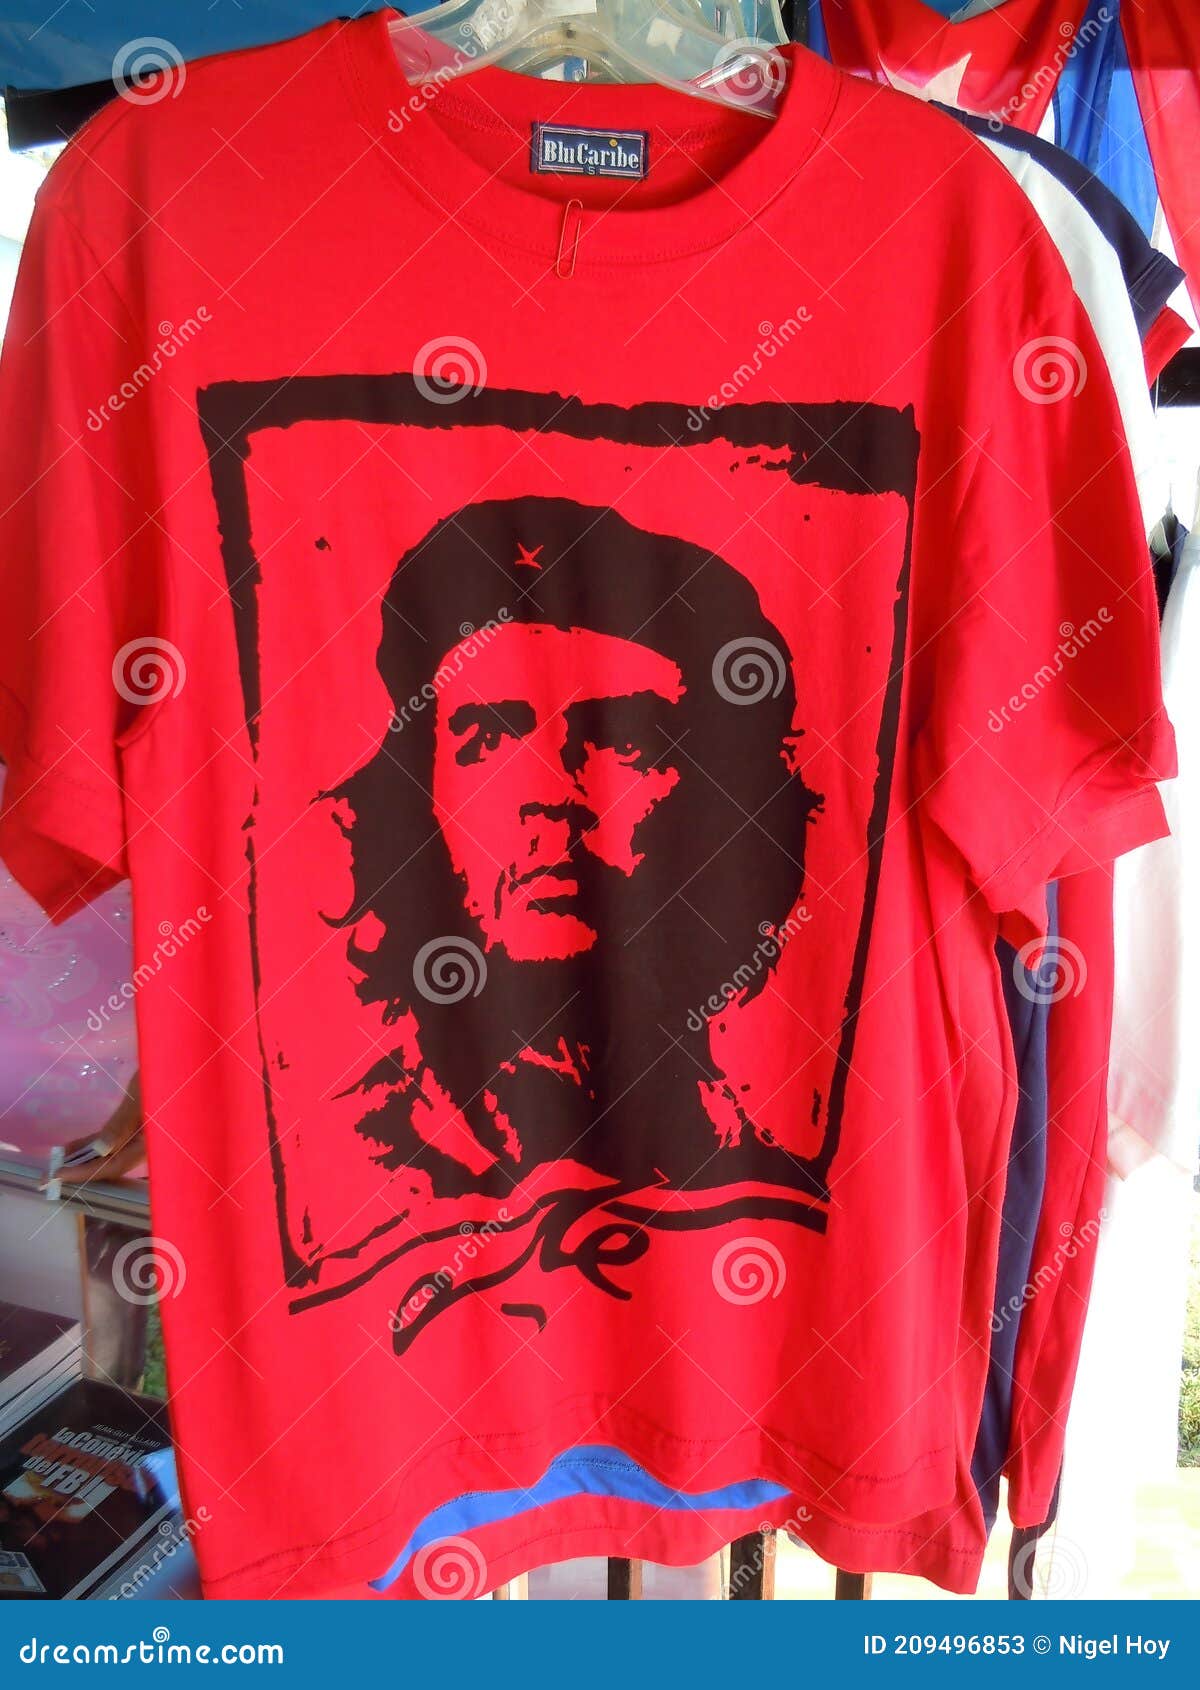 Official Che Guevara Vintage Unisex T-Shirt Licensed Merch El Cuban Revolution 